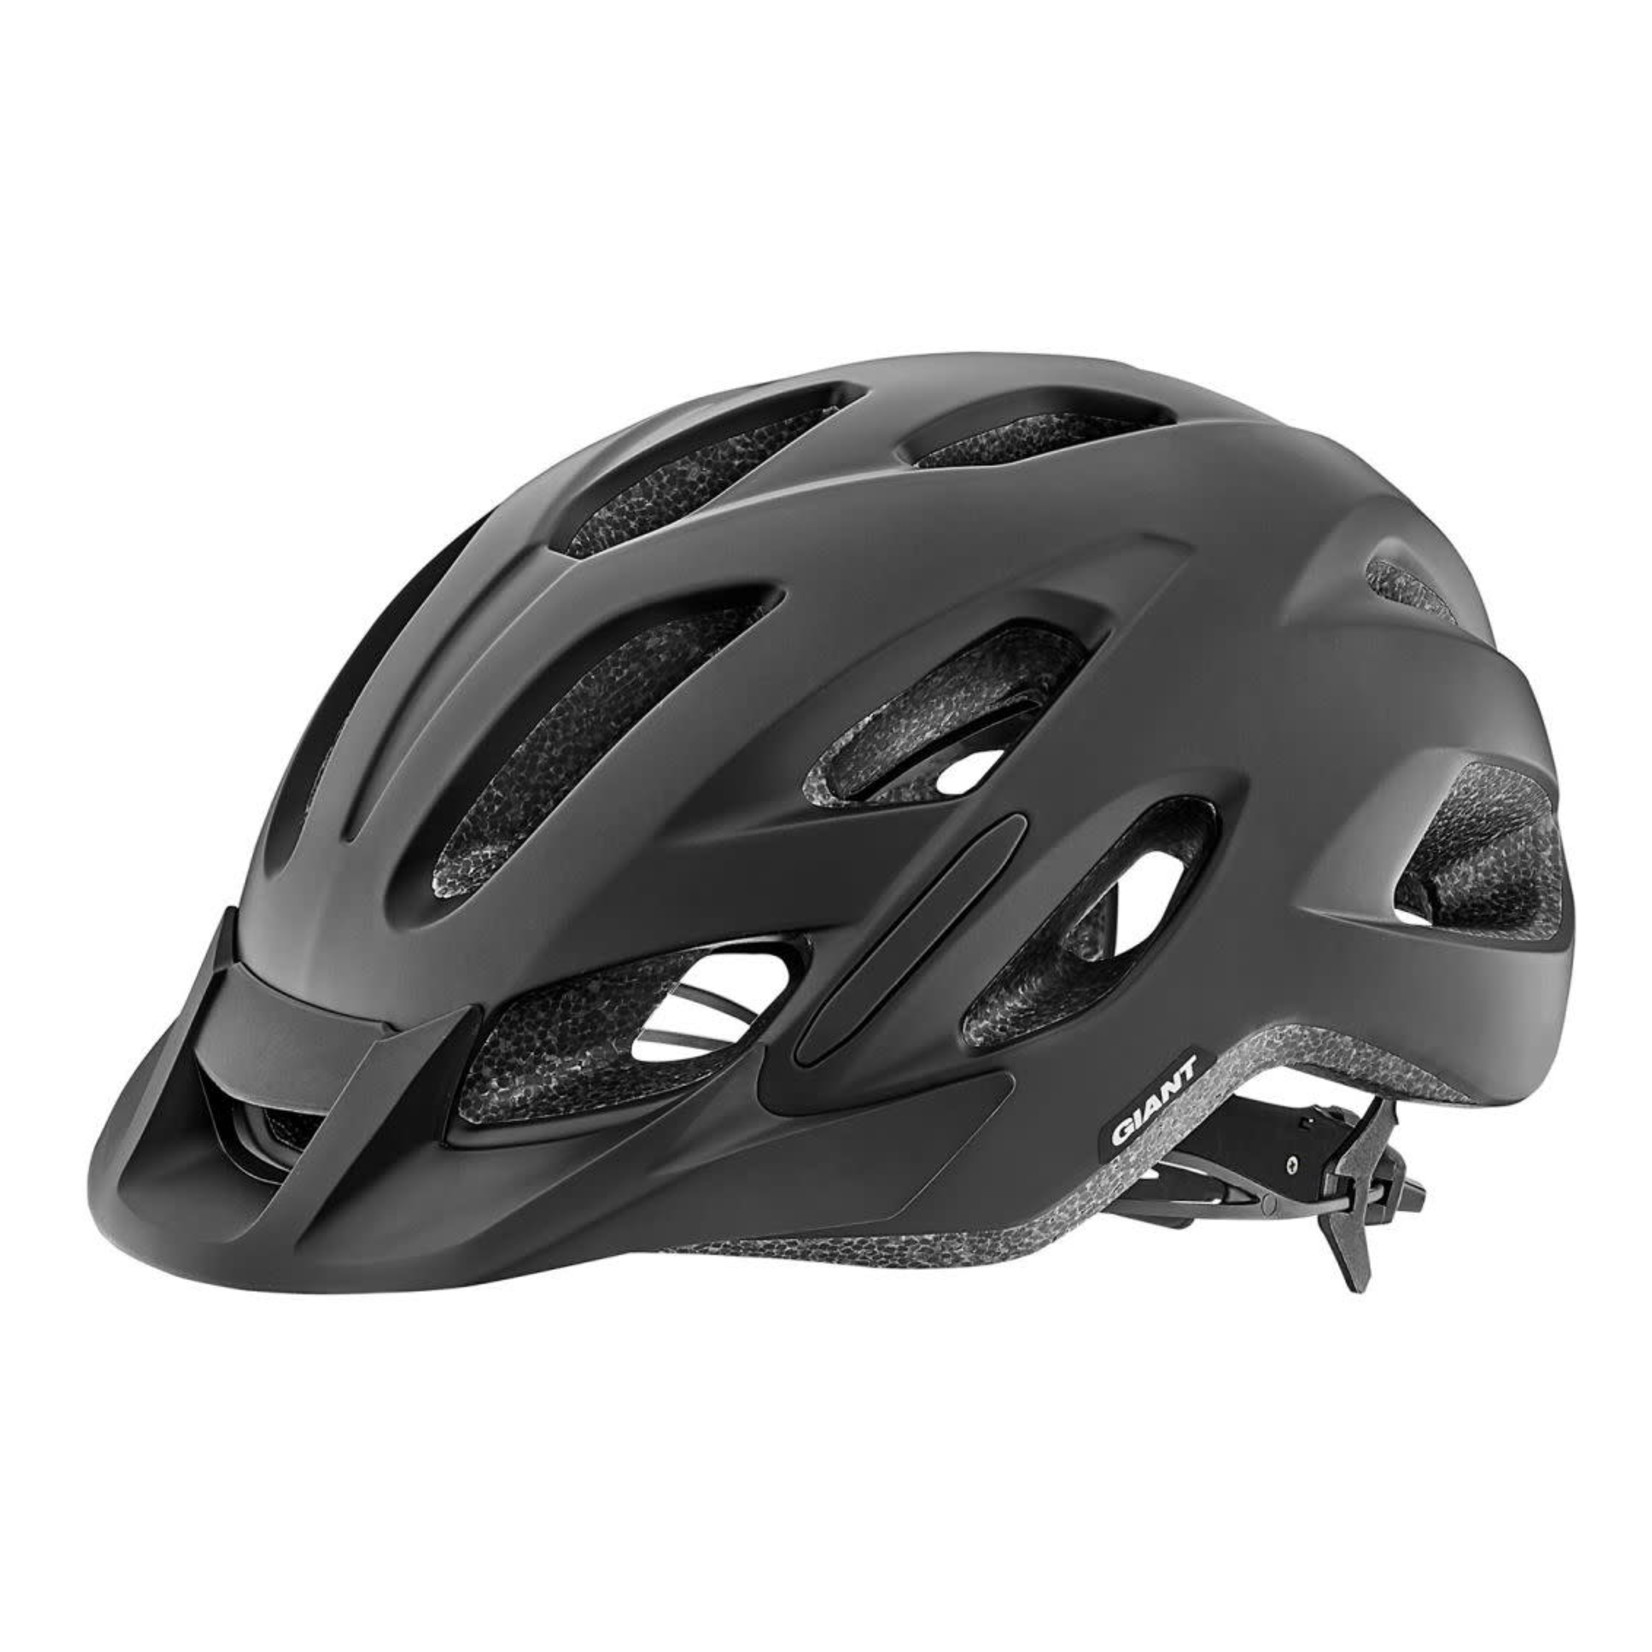 GIANT Compel Helmet Black 53-63cm XL